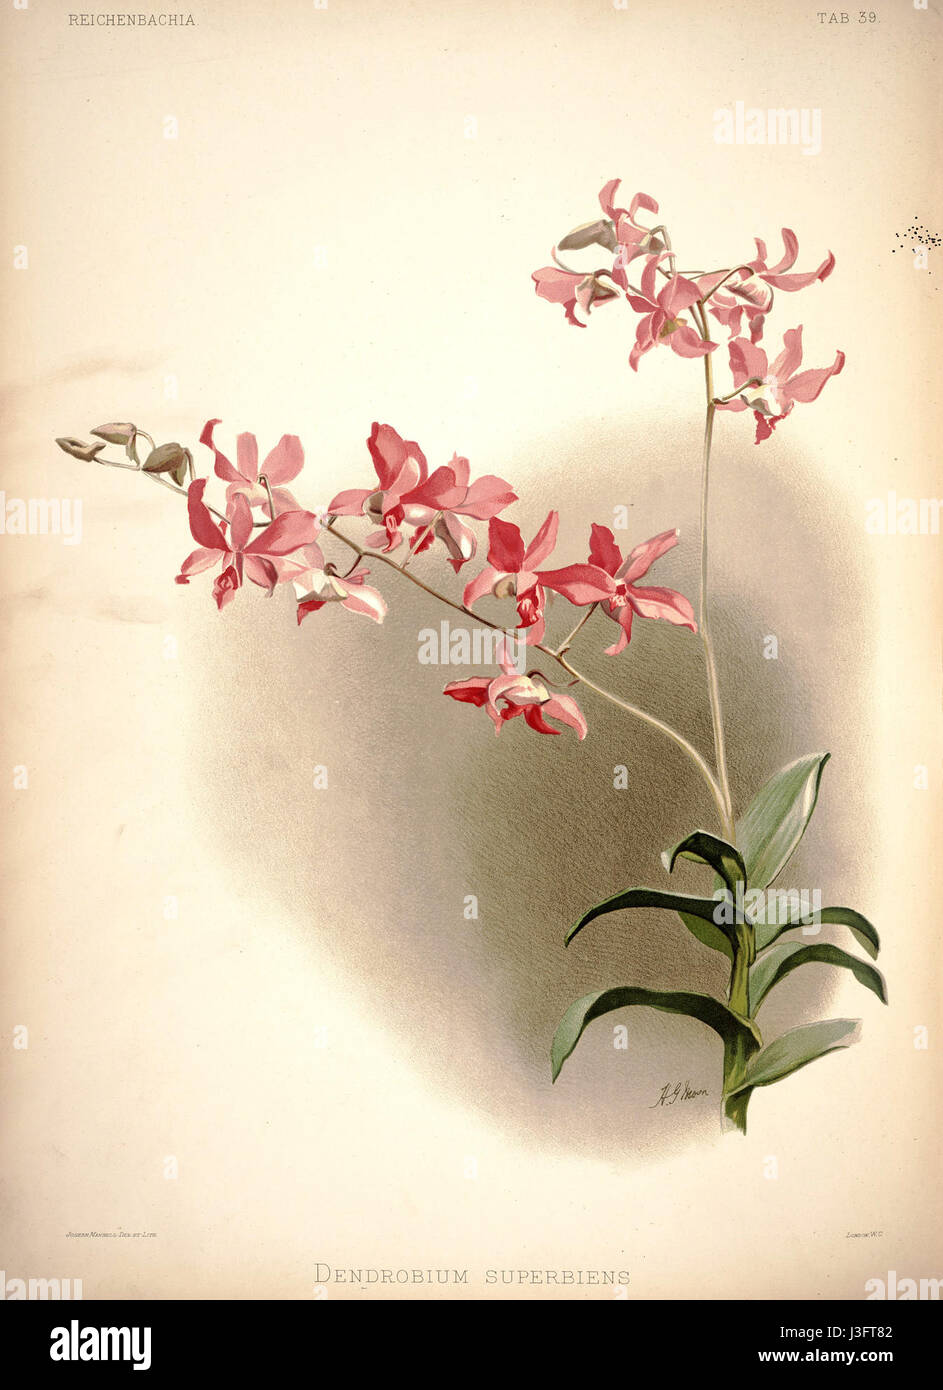 Frederick Sander   Reichenbachia I plate 39 (1888)   Dendrobium superbiens Stock Photo